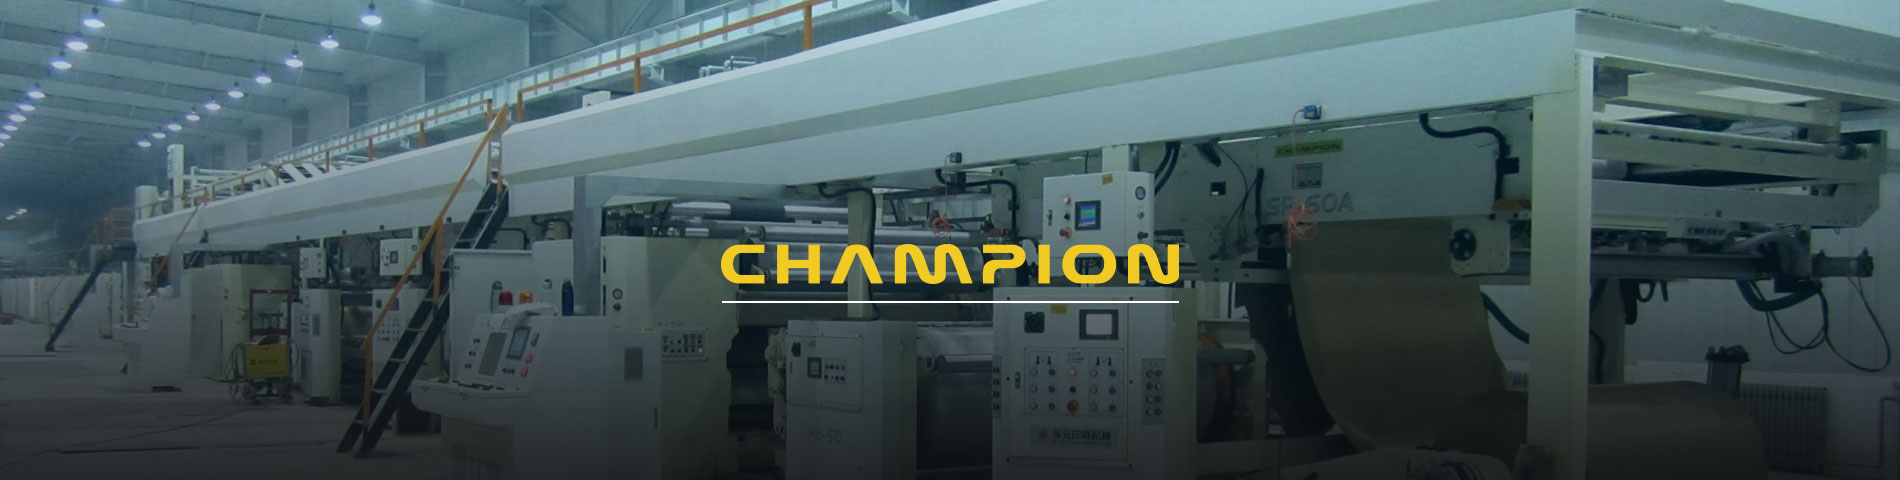 Champion Corrugated هي شركة متخصصة في صناعة الكرتون المموج مصنع معدات